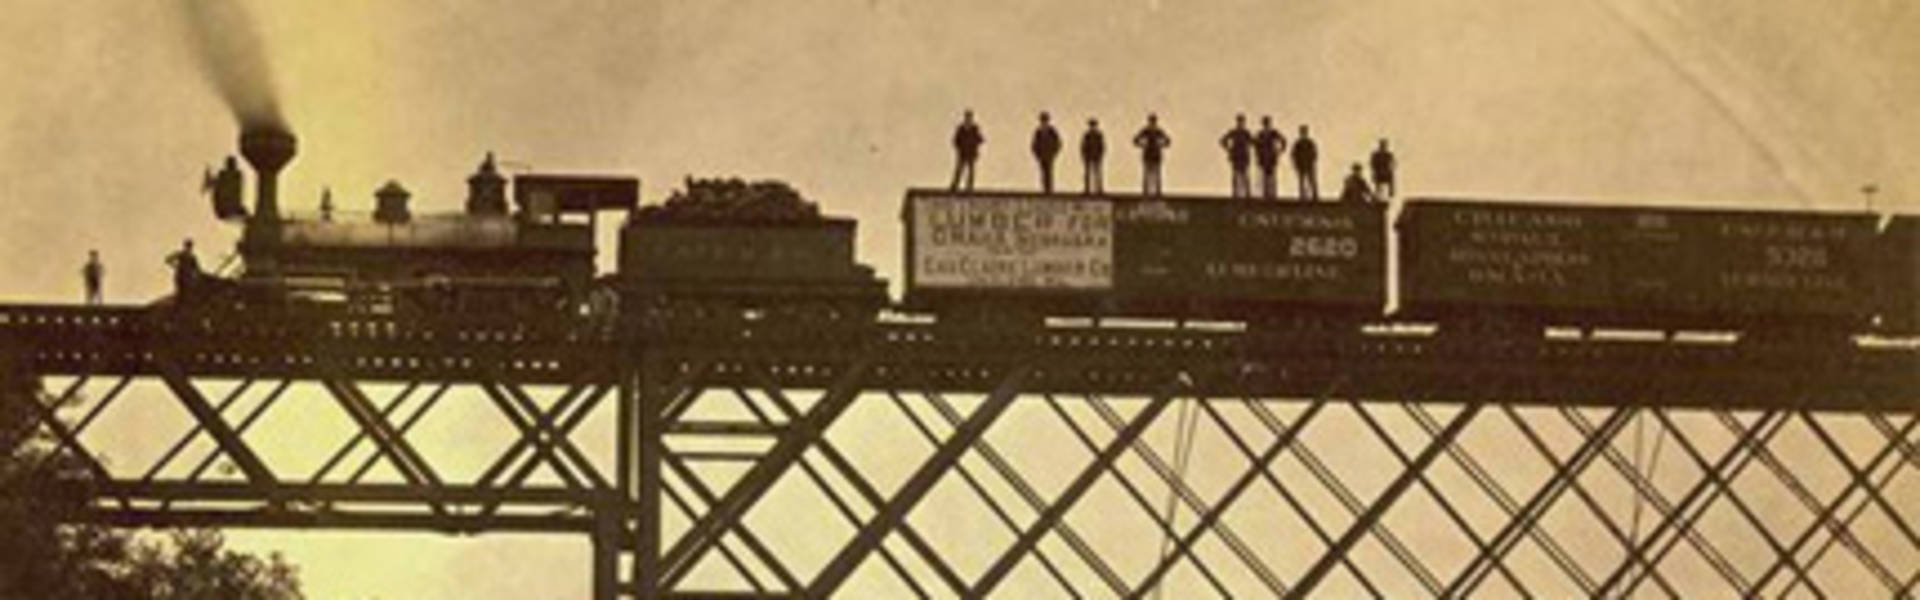 Chippewa Valley Lumber train crossing bridge in 1800s